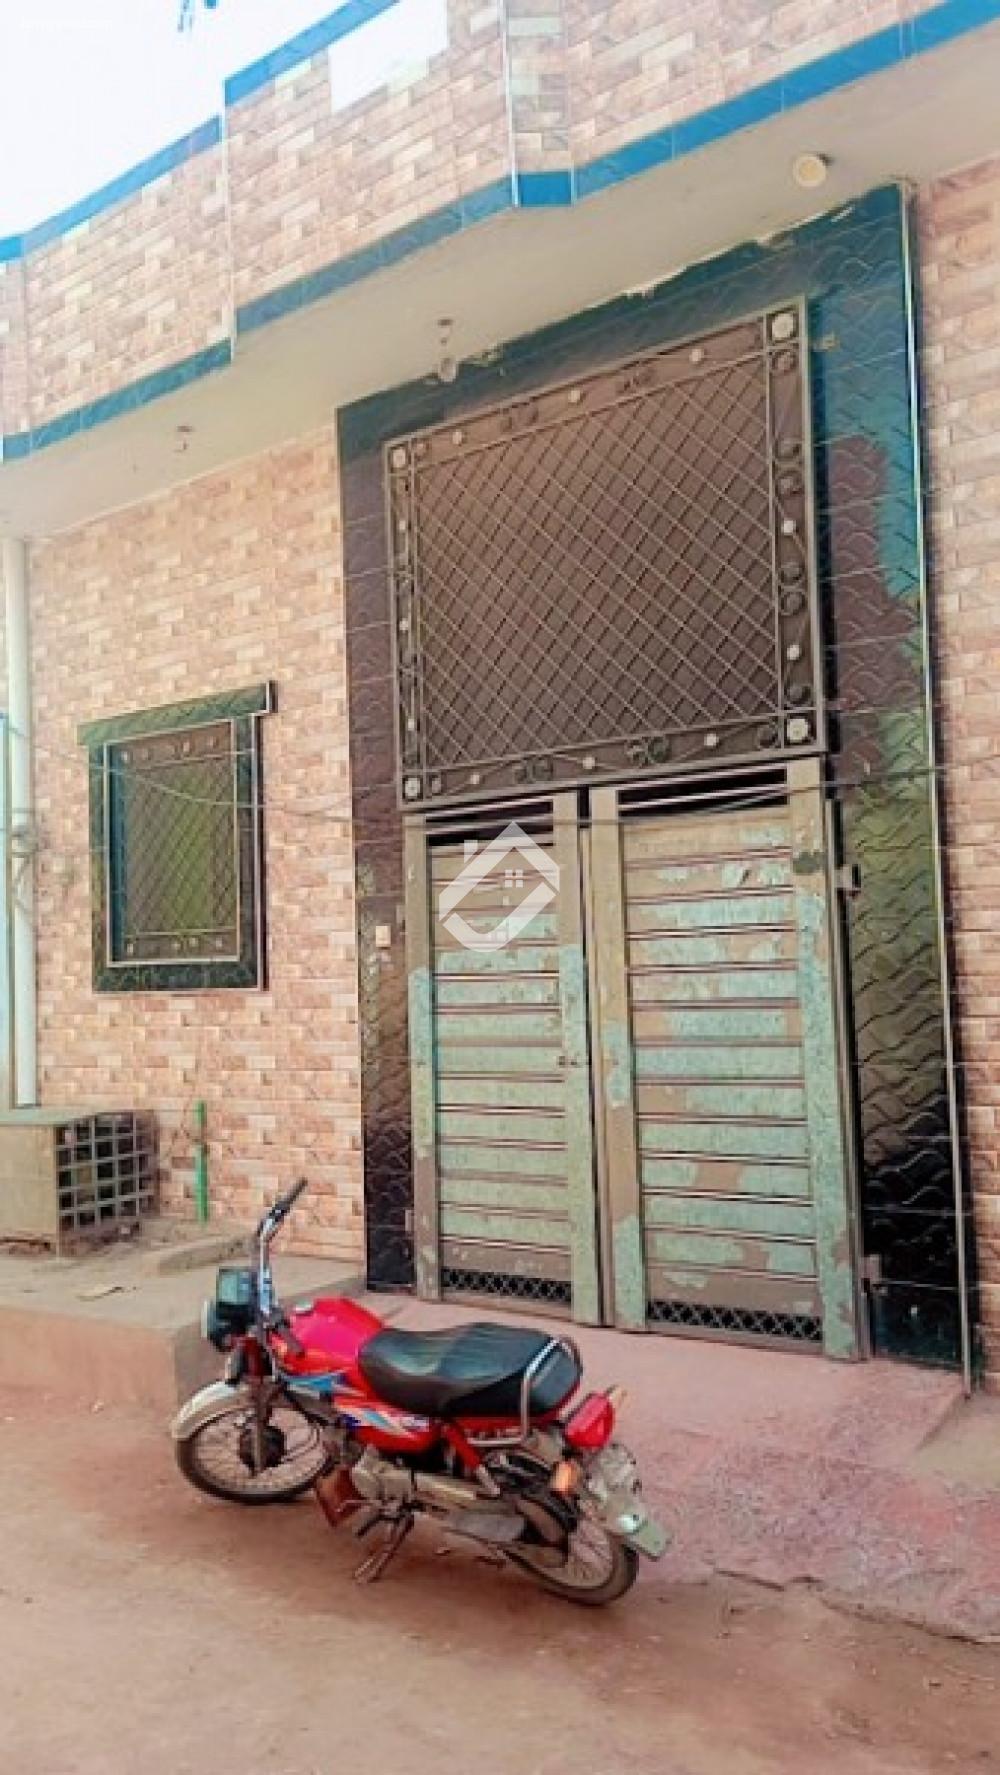 Main image 4 Marla House For Sale In Raza Town Silanwali Road 85 Jhaal  85 jhal silawali road Sargodha